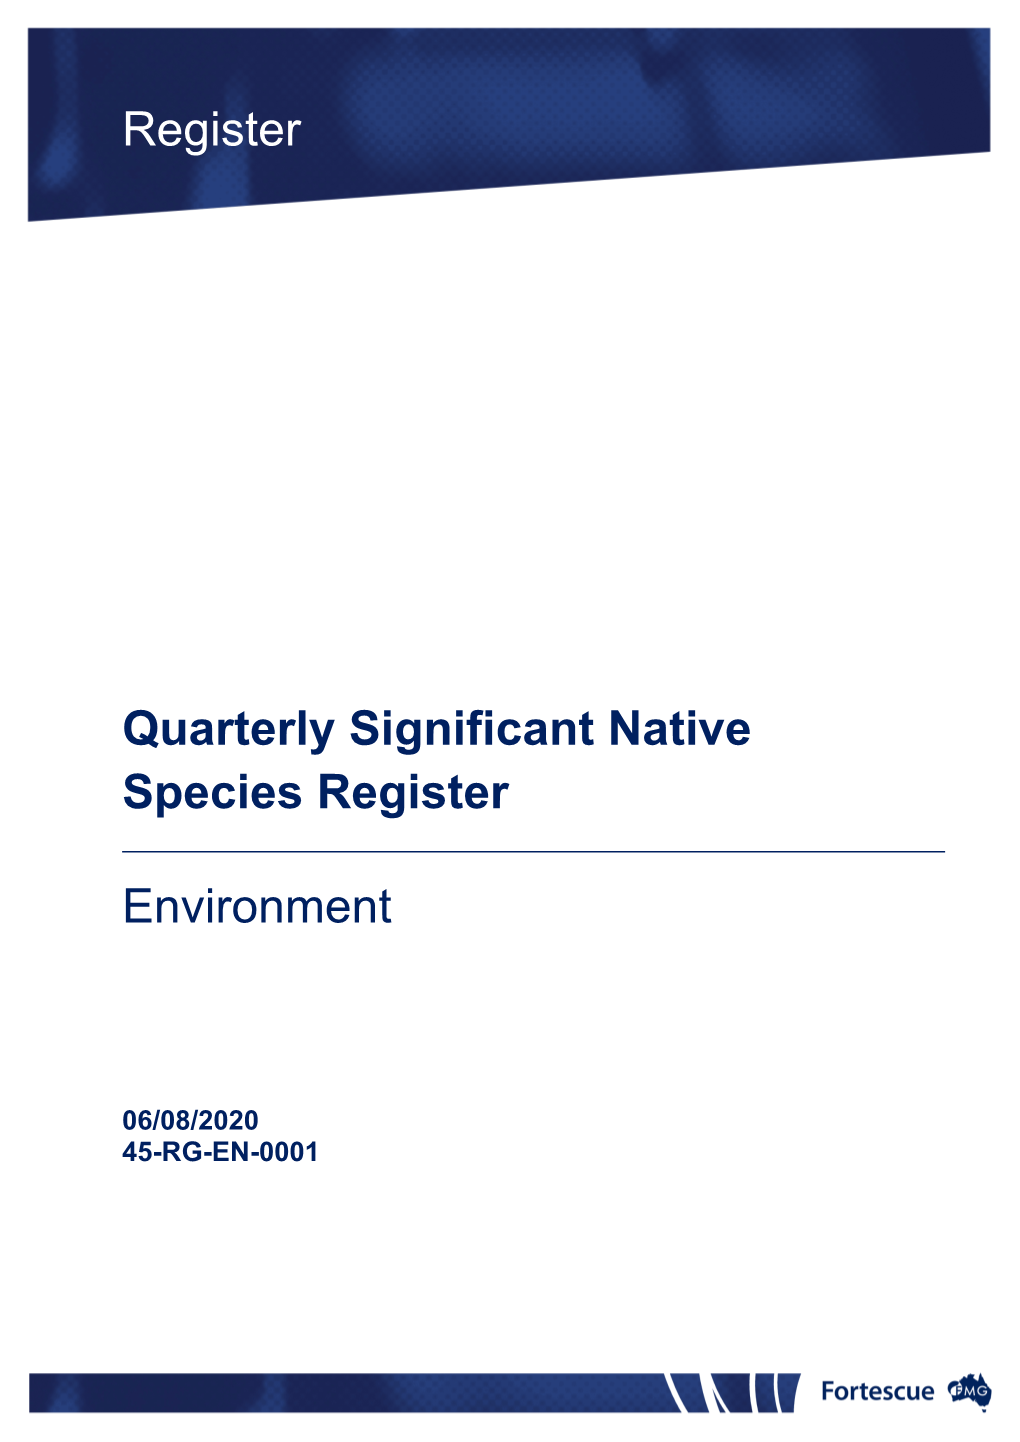 Register Quarterly Significant Native Species Register Environment